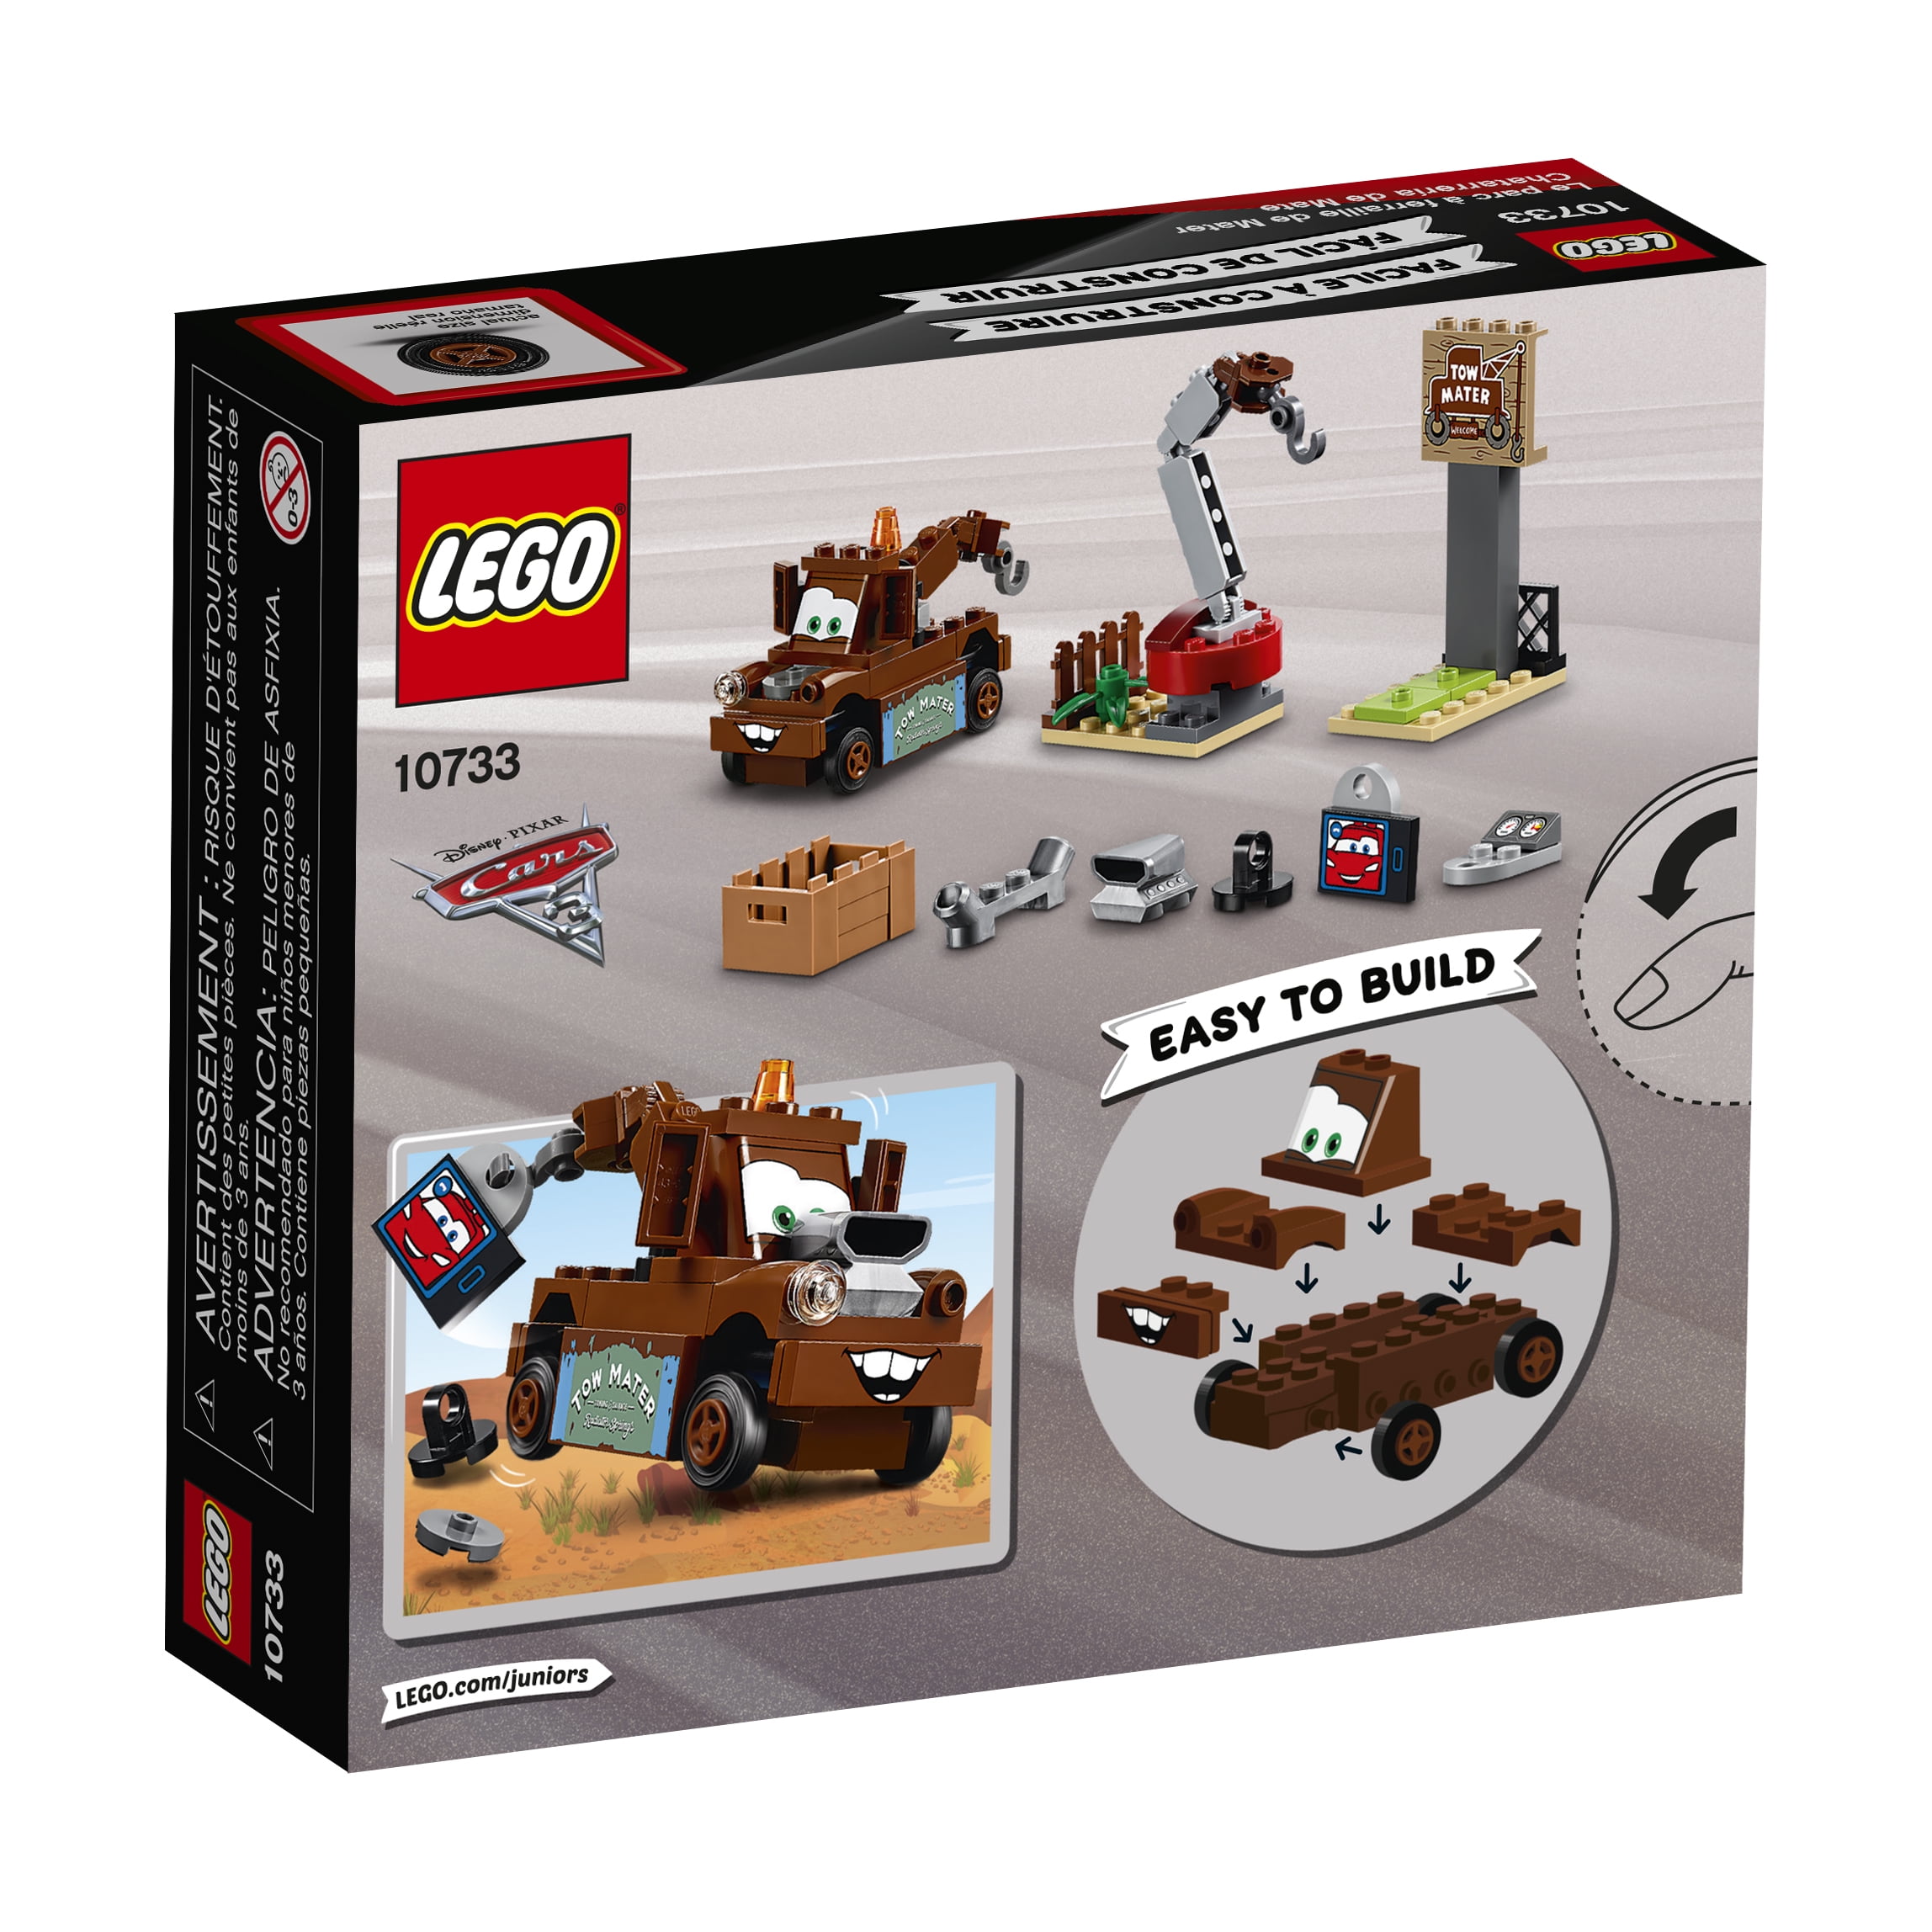 LEGO Juniors Mater's Junkyard Building Set (62 Pieces) - Walmart.com